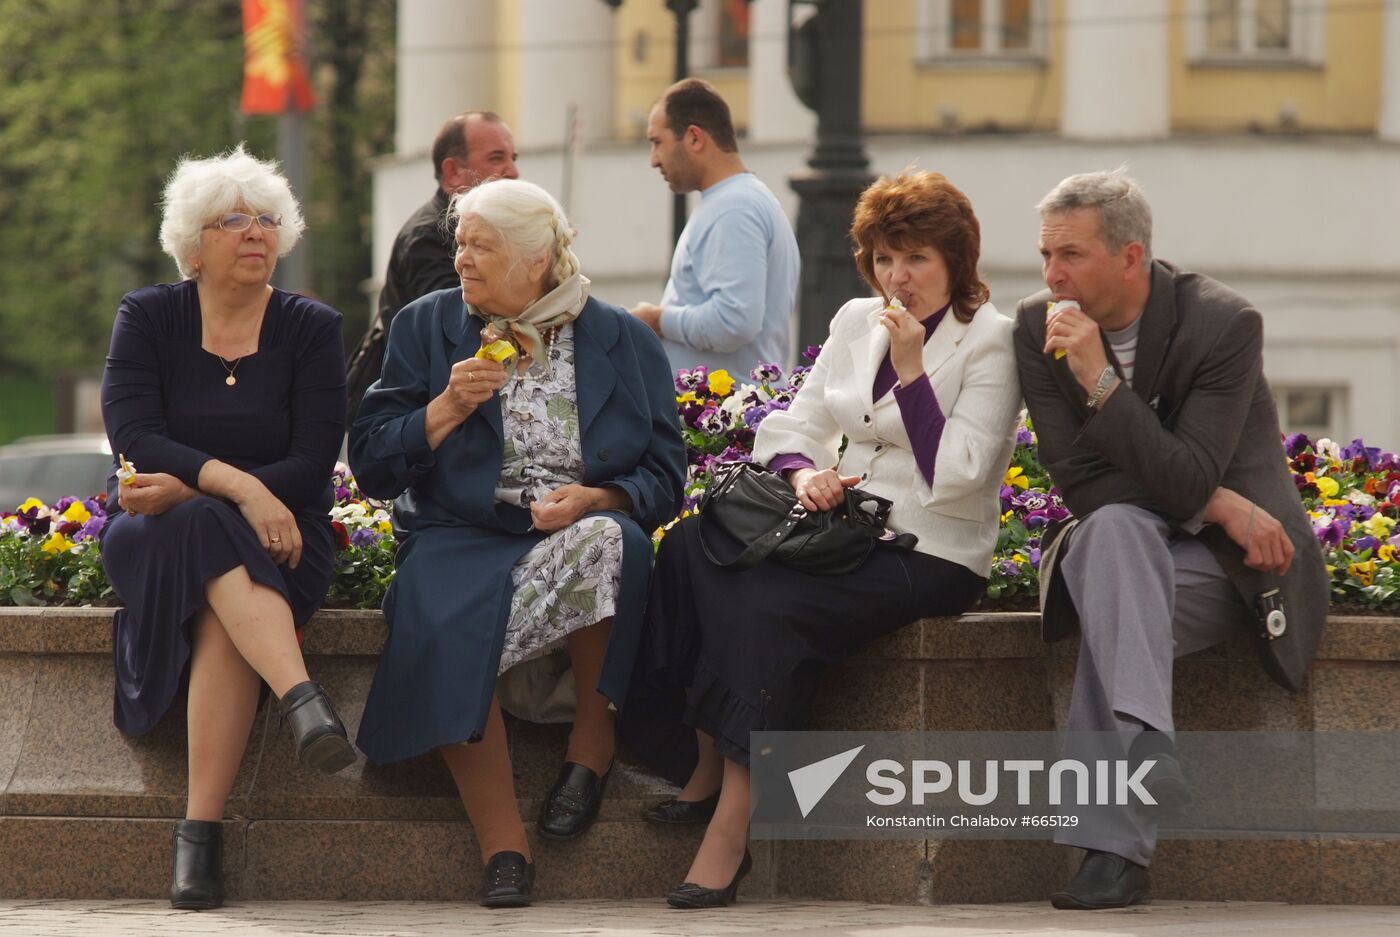 Moscow residents at Manezhnaya Square